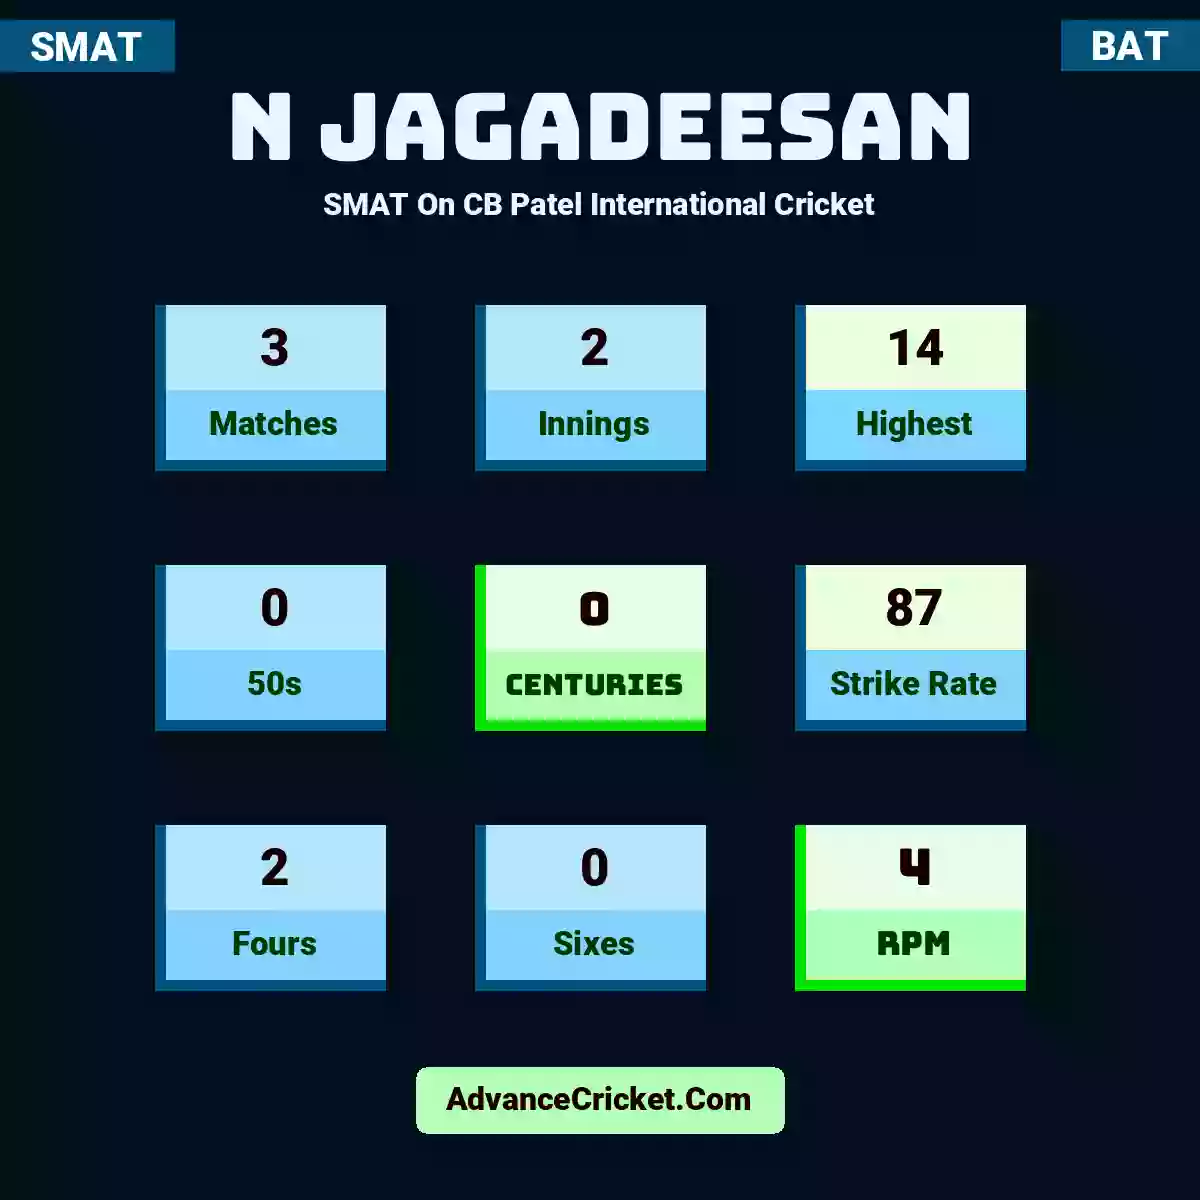 N Jagadeesan SMAT  On CB Patel International Cricket, N Jagadeesan played 3 matches, scored 14 runs as highest, 0 half-centuries, and 0 centuries, with a strike rate of 87. N.Jagadeesan hit 2 fours and 0 sixes, with an RPM of 4.